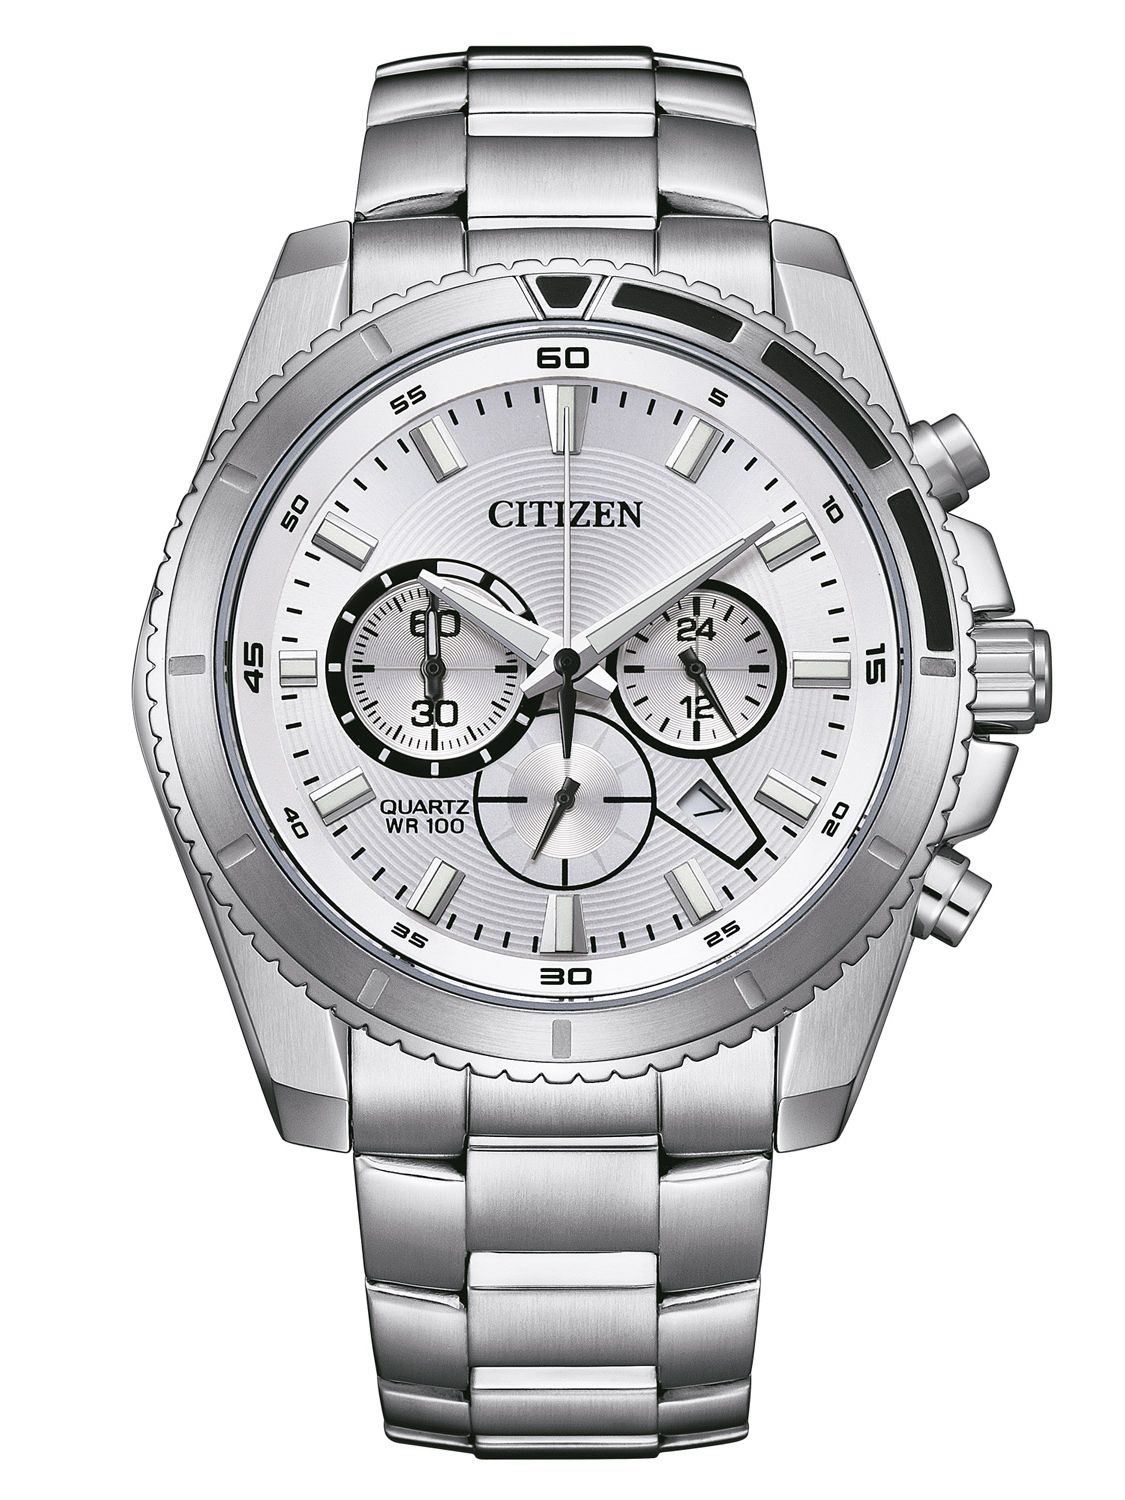 Citizen Men's Watch Chronograph Steel/Silver Tone AN8200-50A • uhrcenter